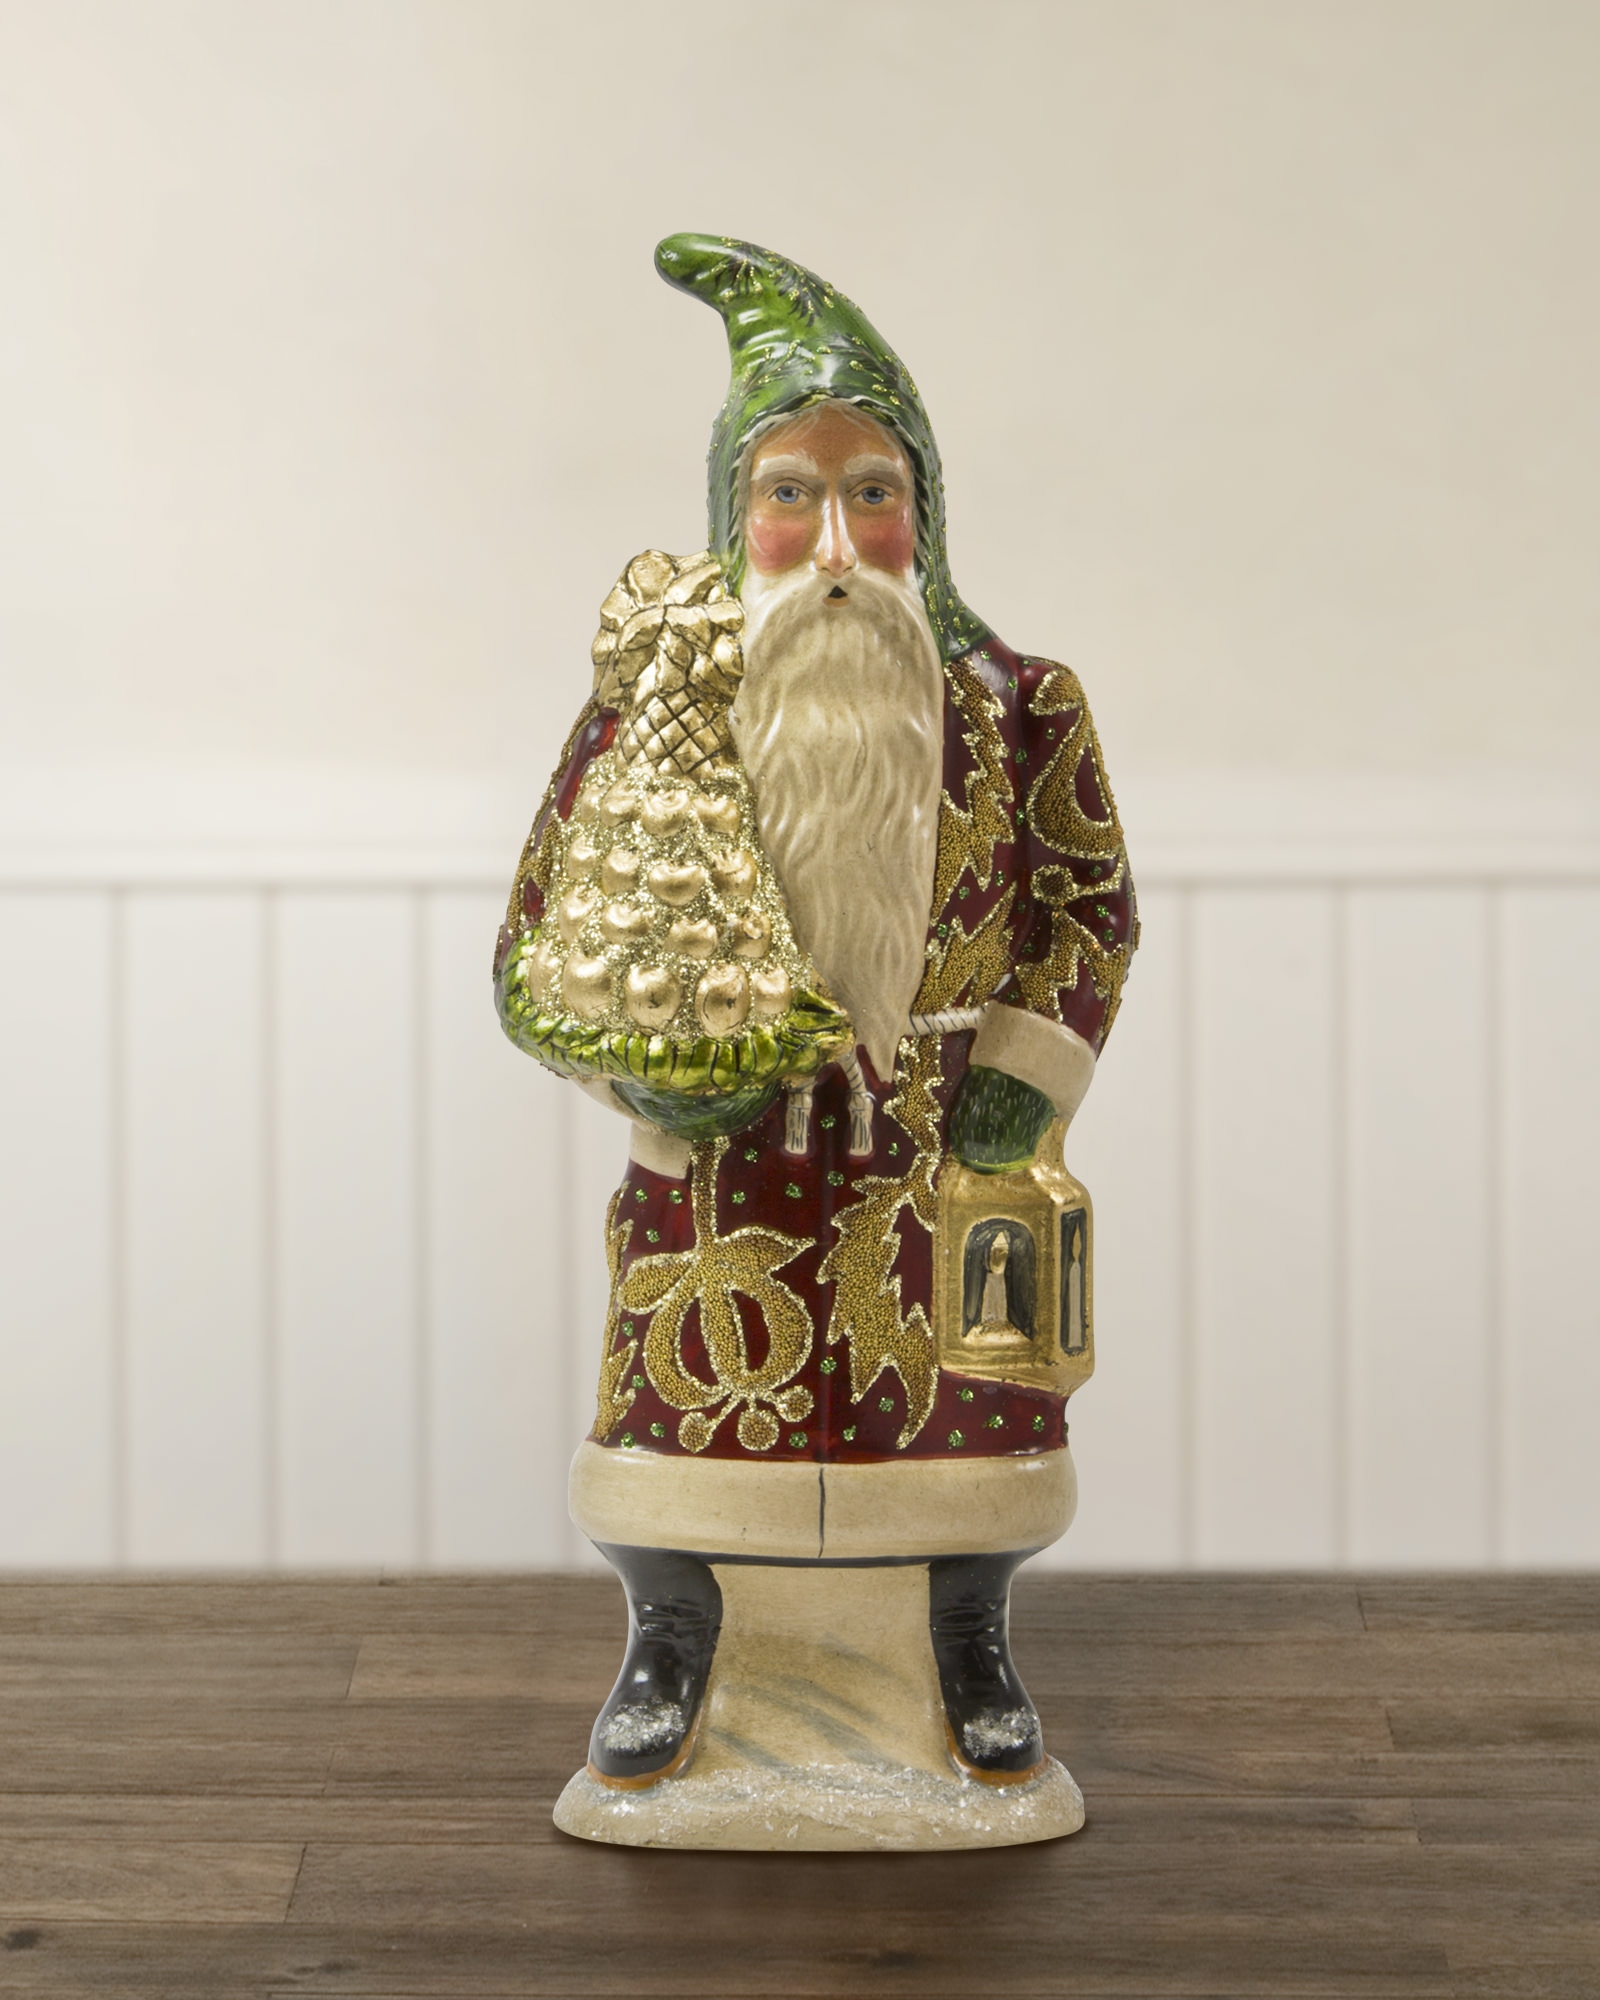 Balsam Hill Handcrafted Items - Vaillancourt Chalkware Burgundy Santa